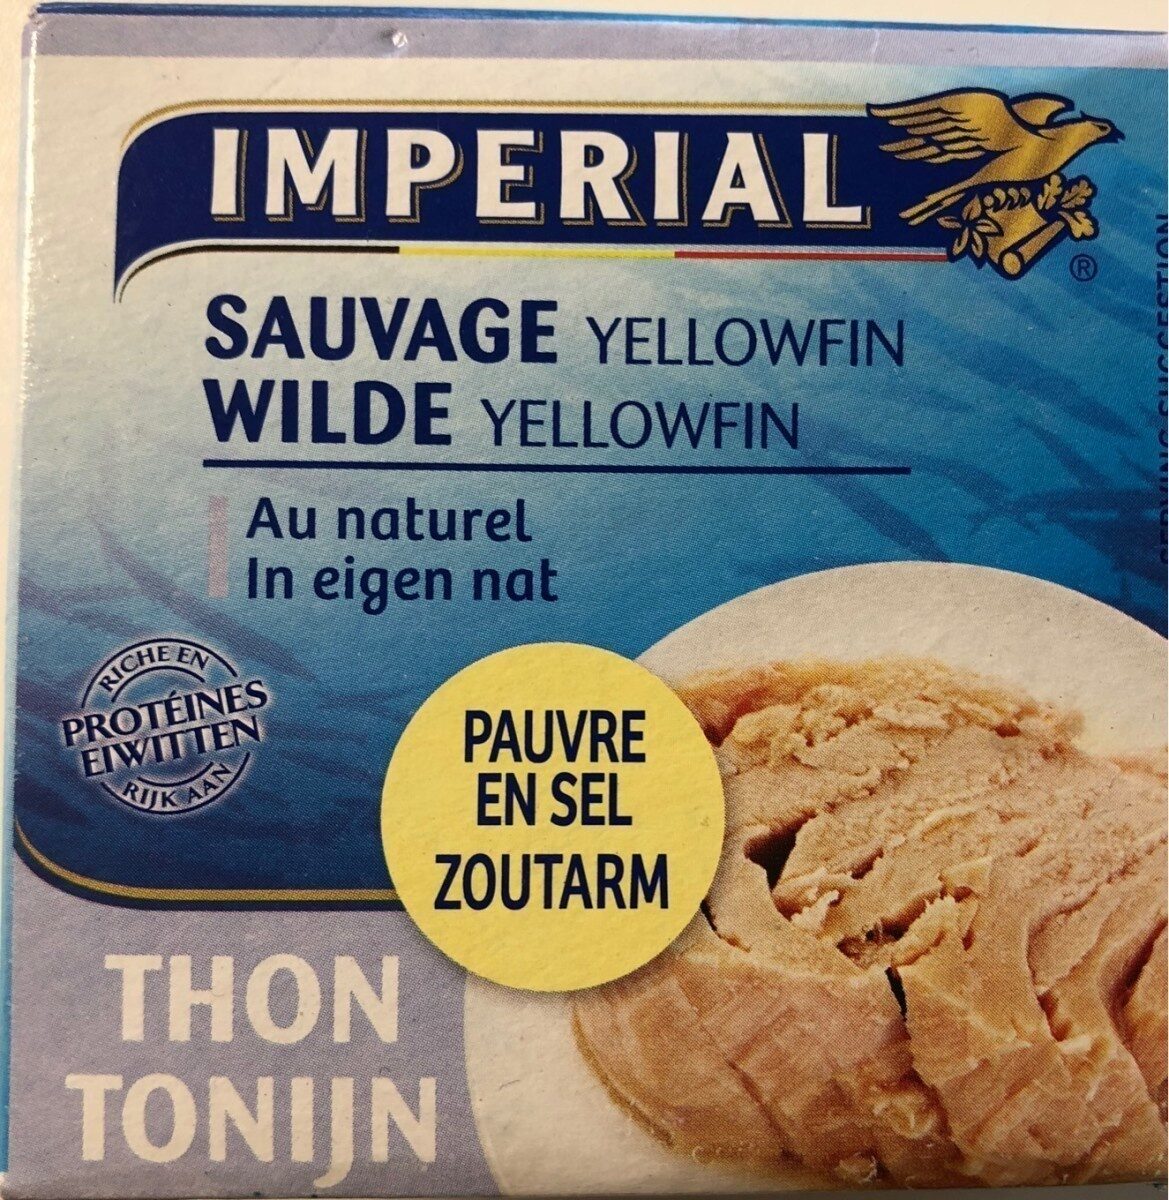 Thon sauvage yellowfin au naturel - Product - fr